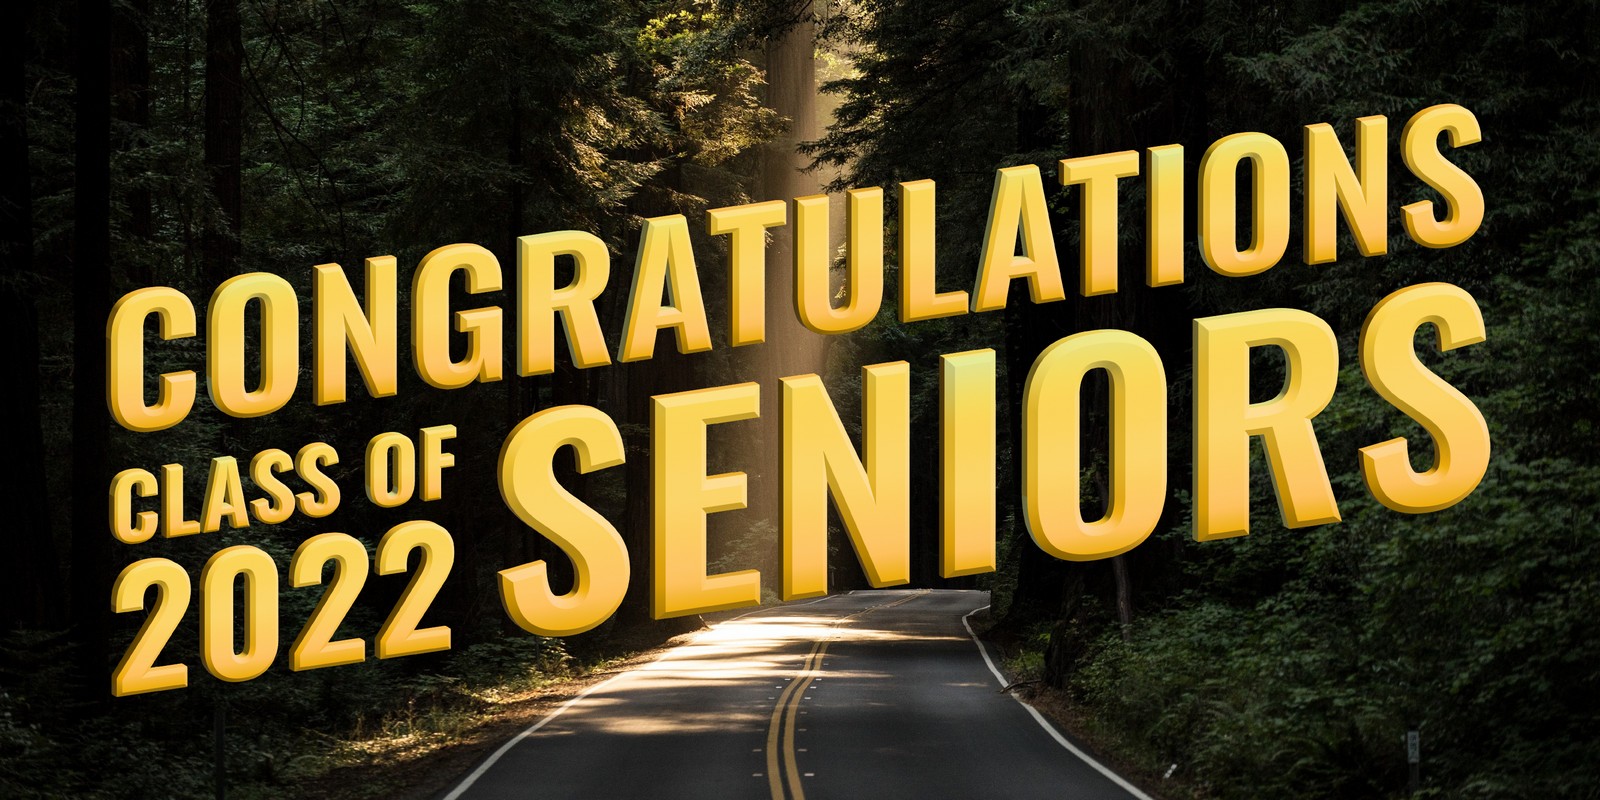 Congratulations Class of 2022 Seniors